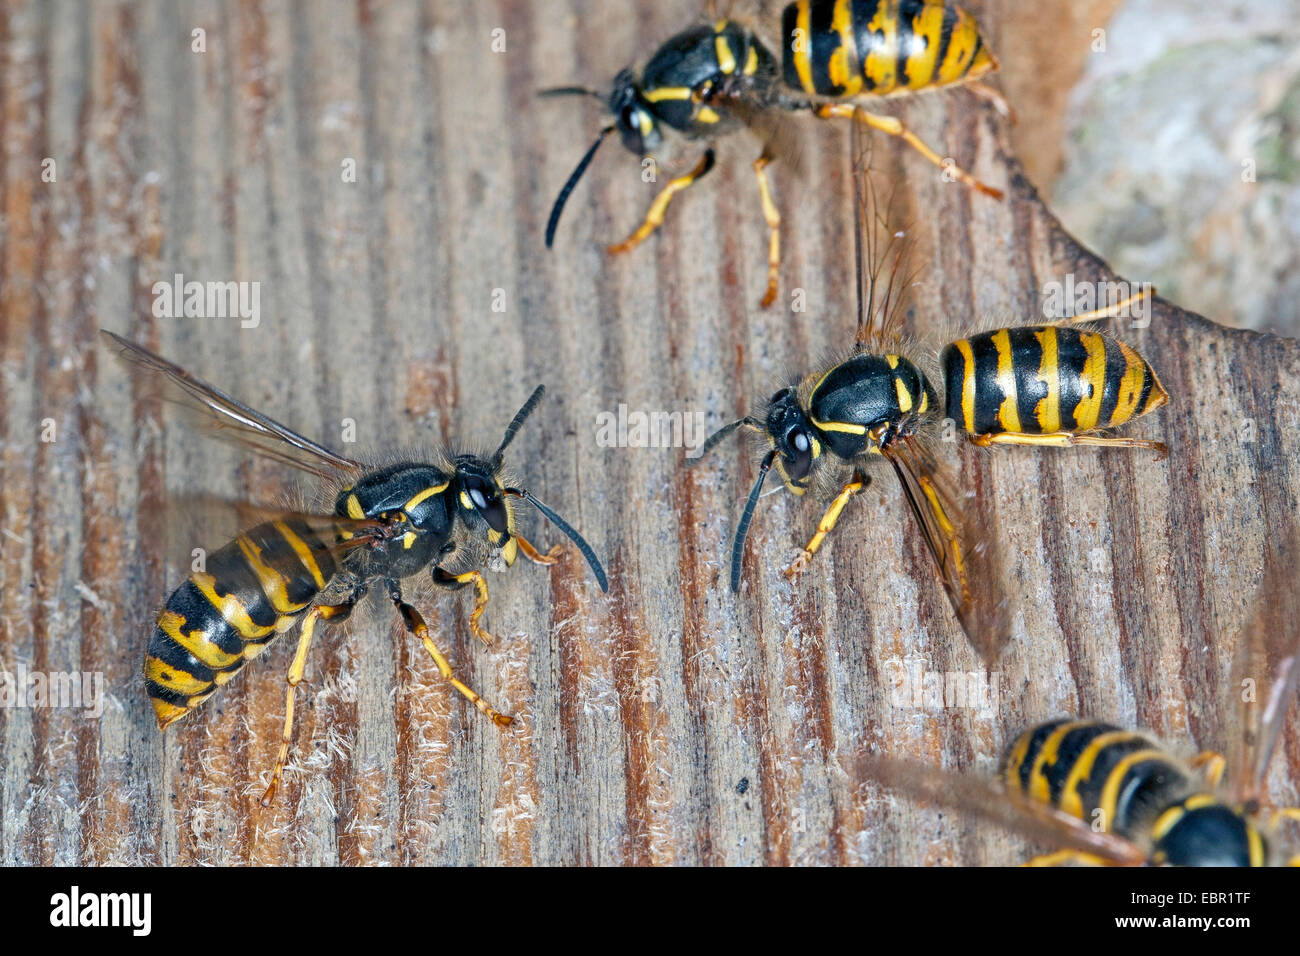 Saxon wasp (Dolichovespula saxonica, Vespula saxonica), some Saxon wasps at a bird nest box, Germany Stock Photo